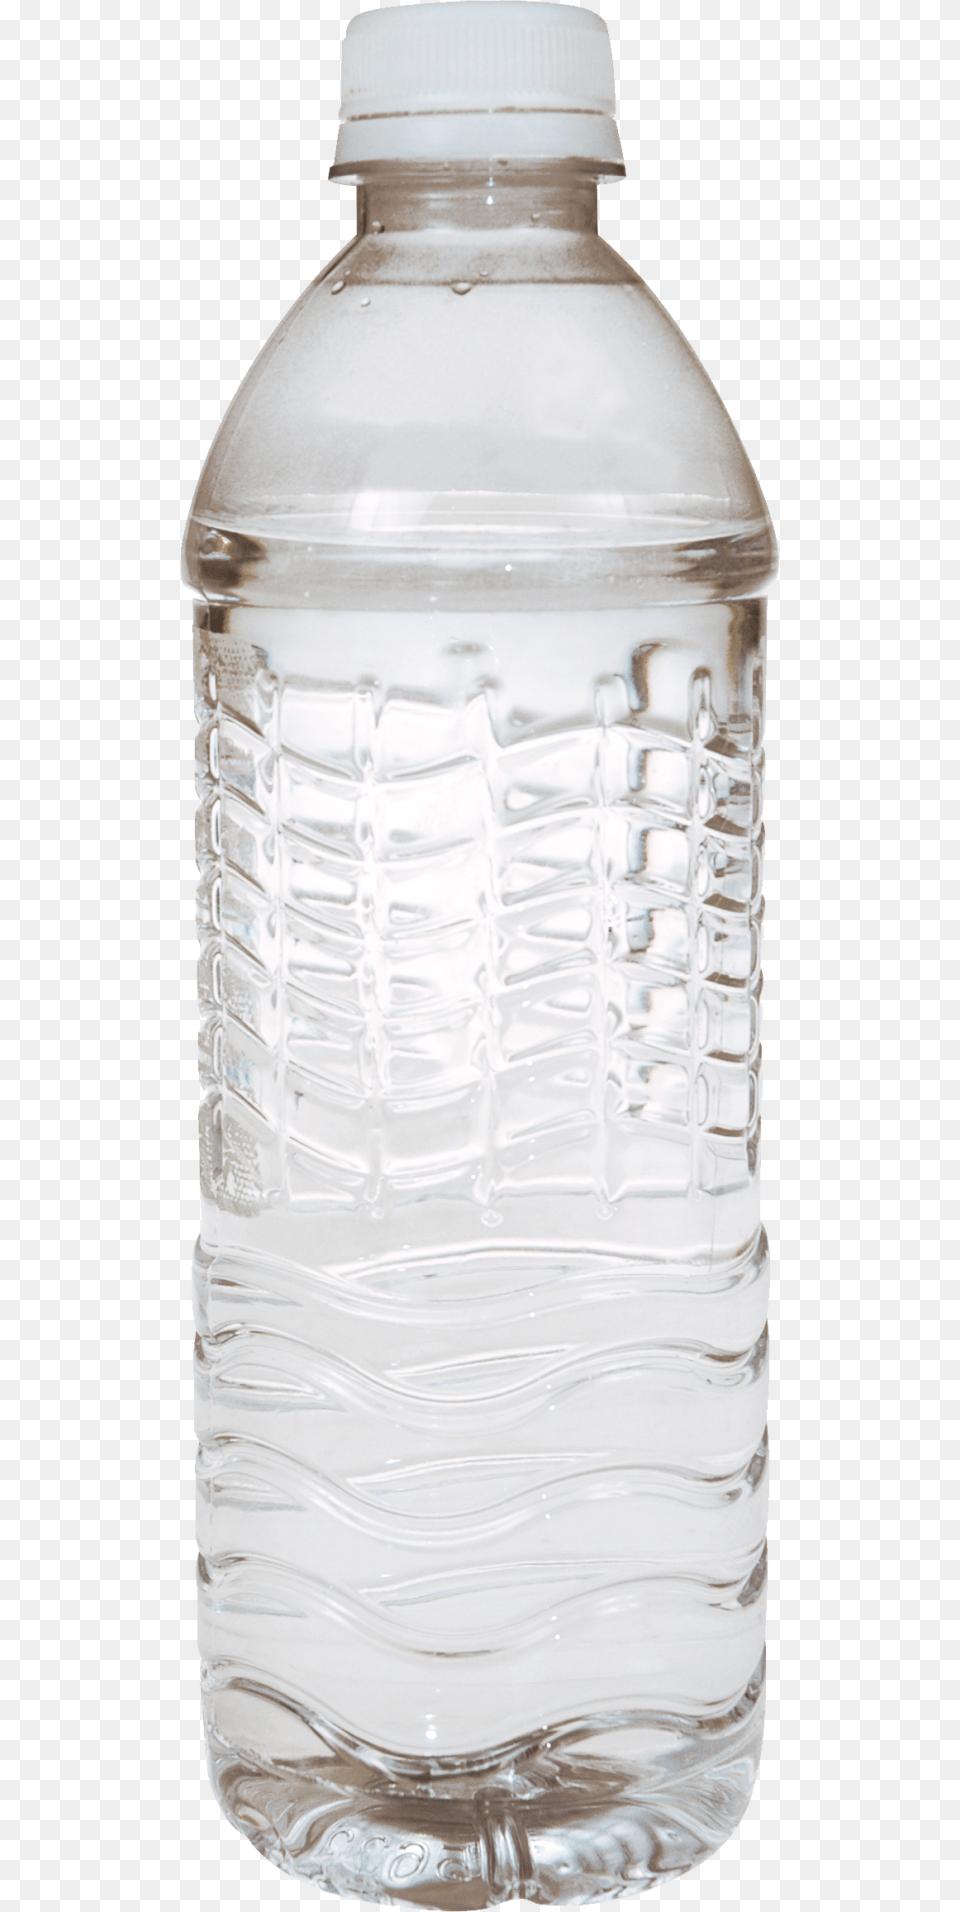 Water Bottle Free Download, Jar, Water Bottle, Shaker, Jug Png Image